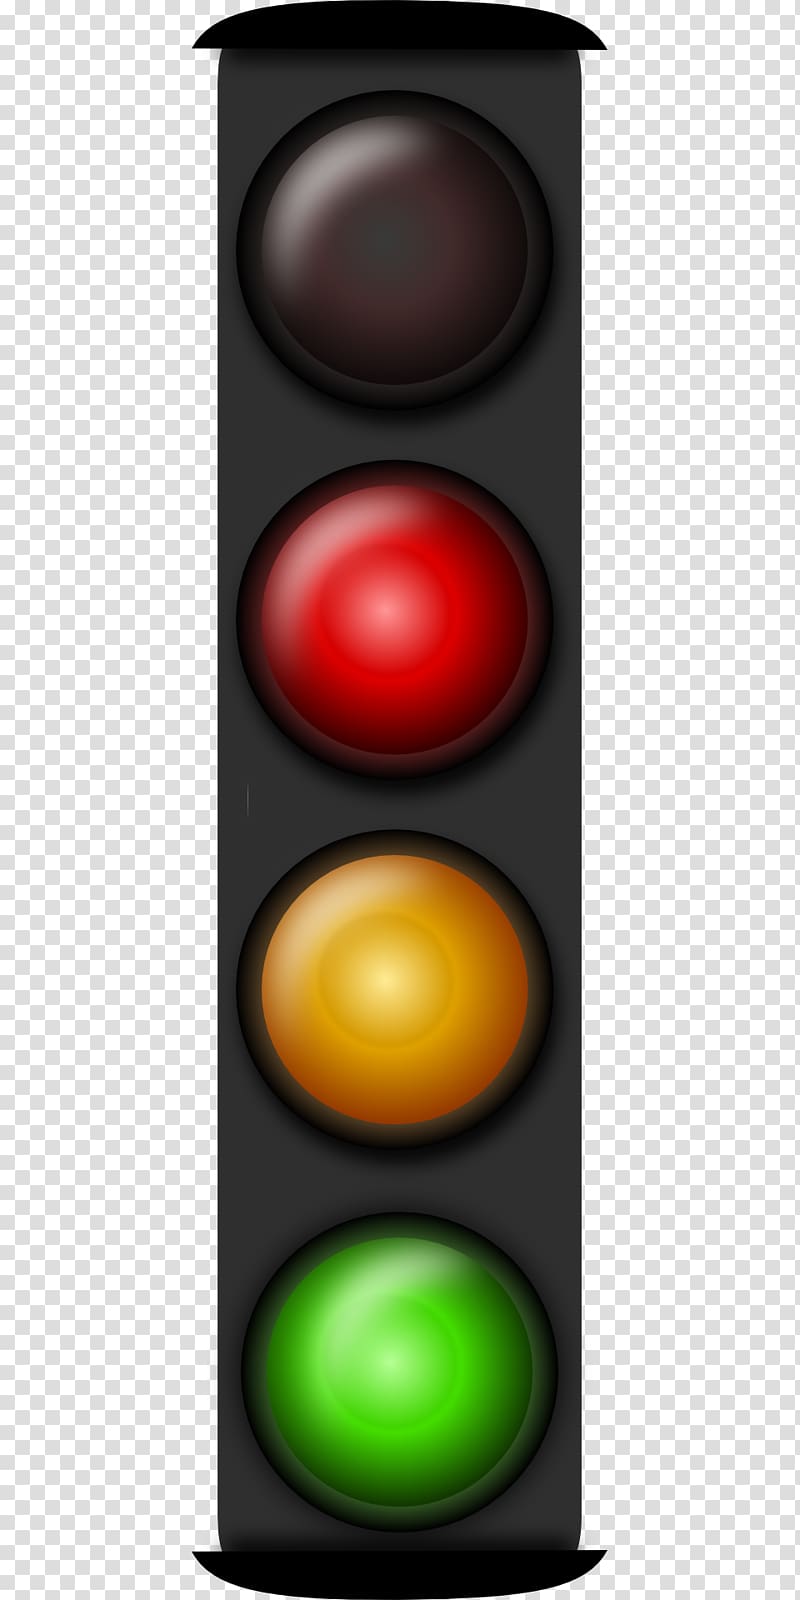 Traffic light Rail transport, Railway traffic lights transparent background PNG clipart